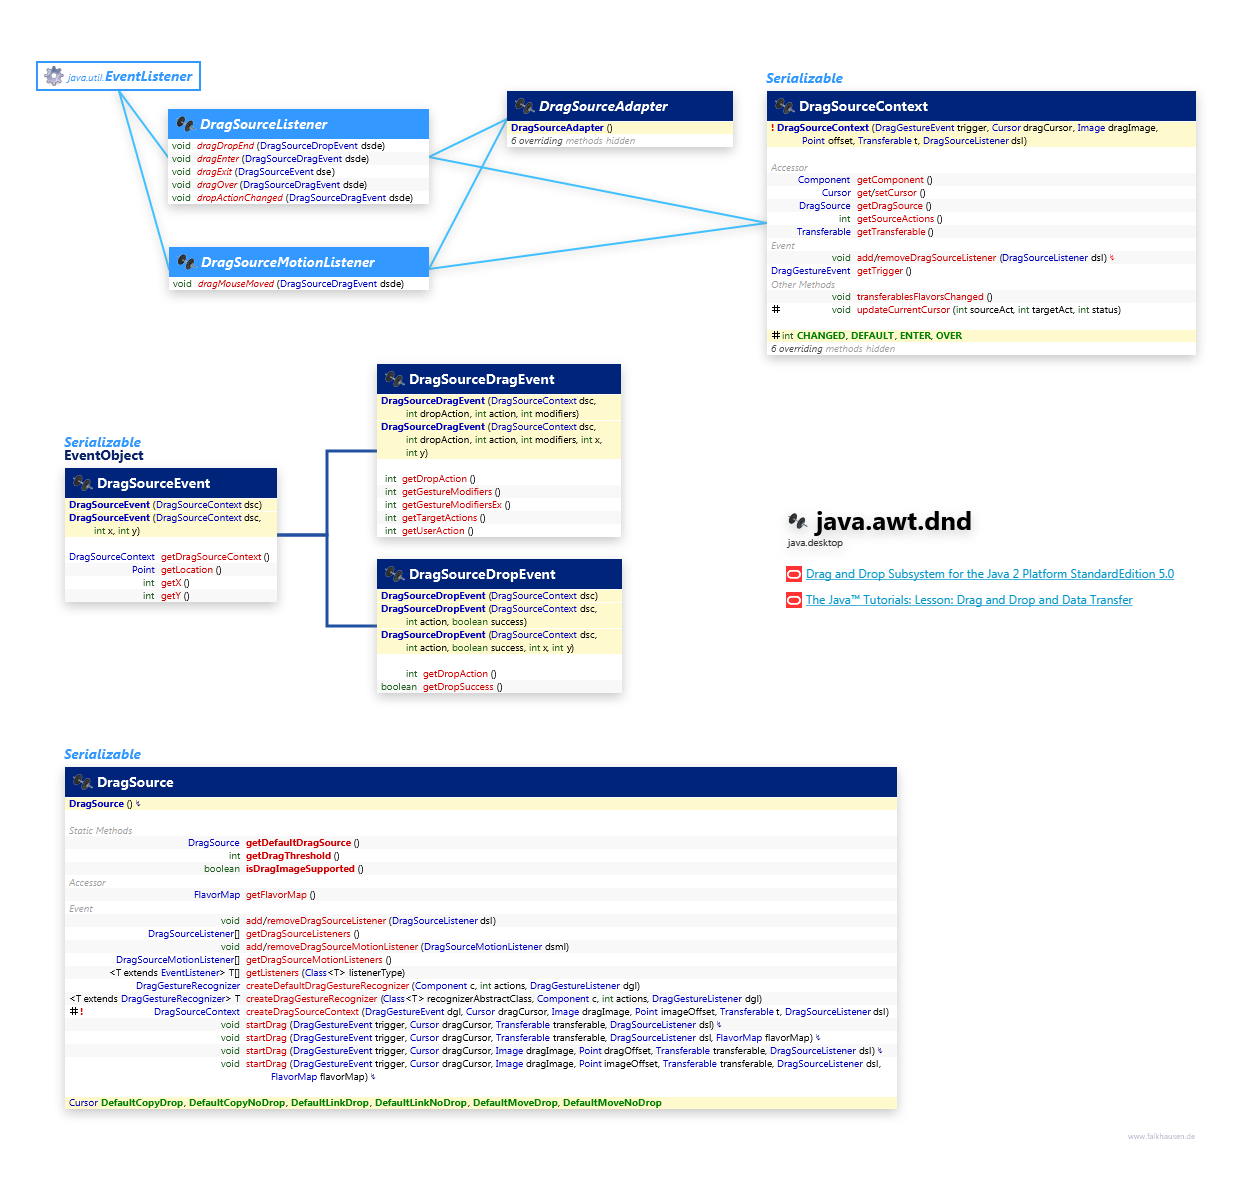 java.awt.dnd DragSource class diagram and api documentation for Java 10